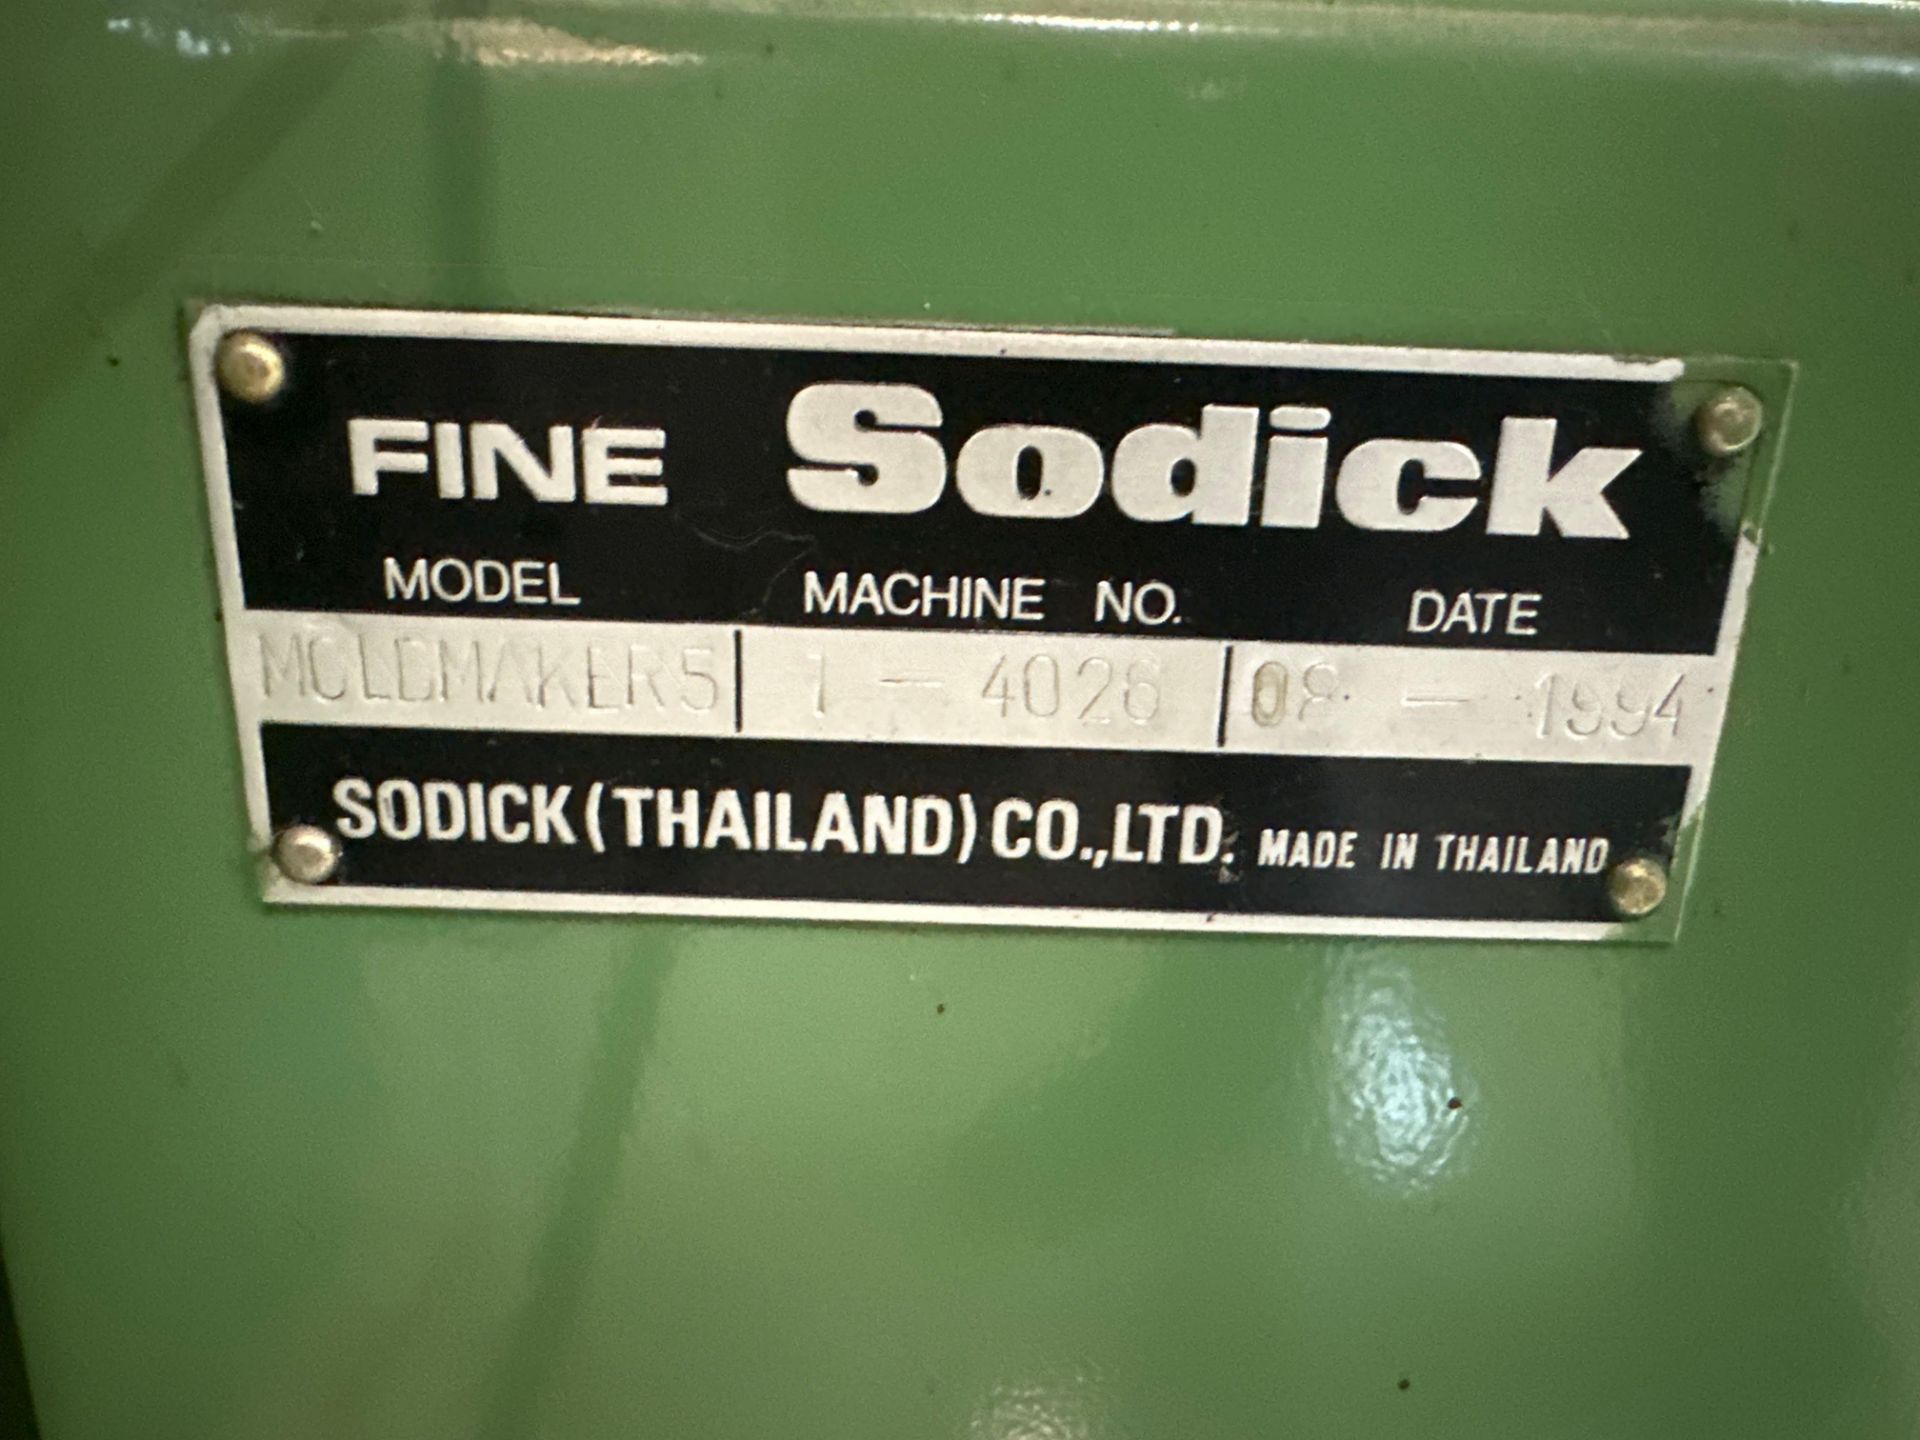 Sodick MoldMaker 5 CNC Sinker EDM, Neuro Fuzzy II 80 Control, s/n 1-4026, 1994 - Image 9 of 10